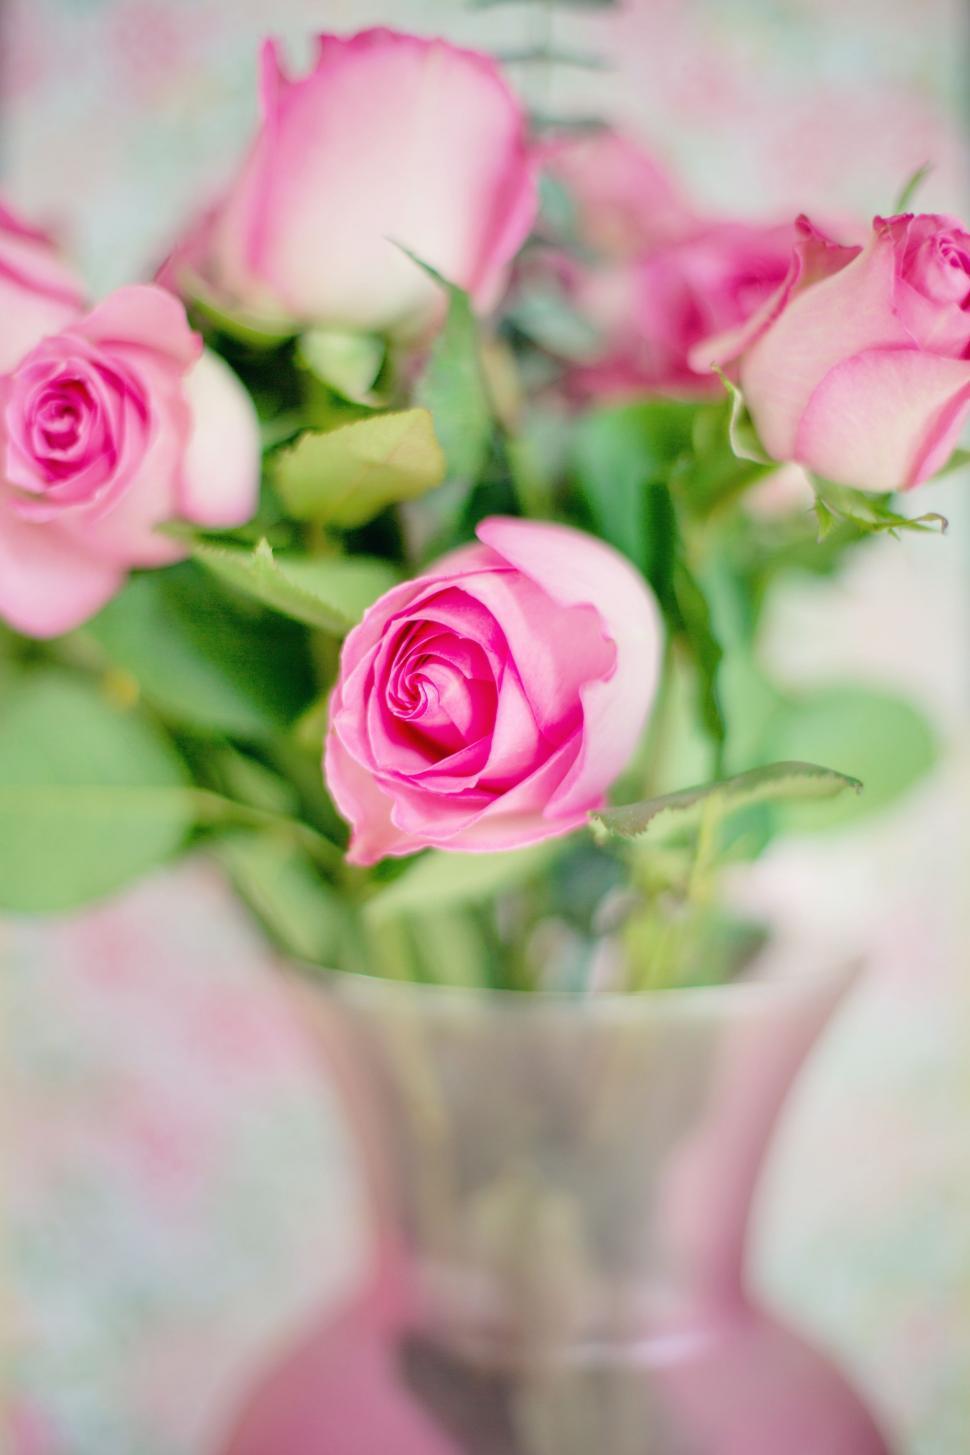 Free Image of Pink Roses in Vase 